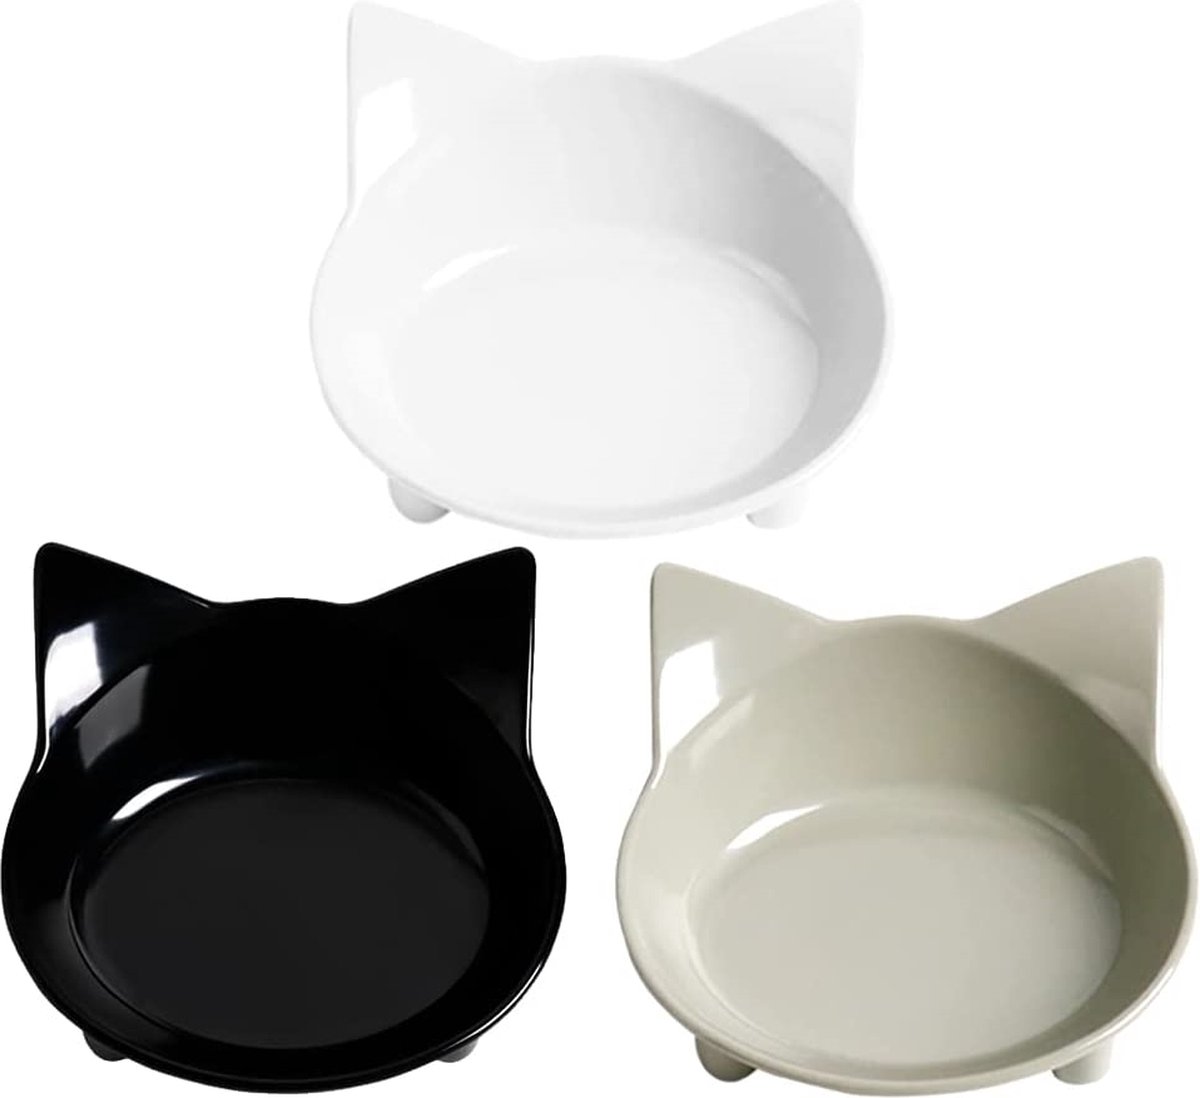 SKRTUAN Cat Bowls, 3 Set van Food Bowl, Cat Food Bowl Set, Antislip Cat Bowl, Water Bowl, Bowls for Cat om snorhaarvermoeidheid te verlichten